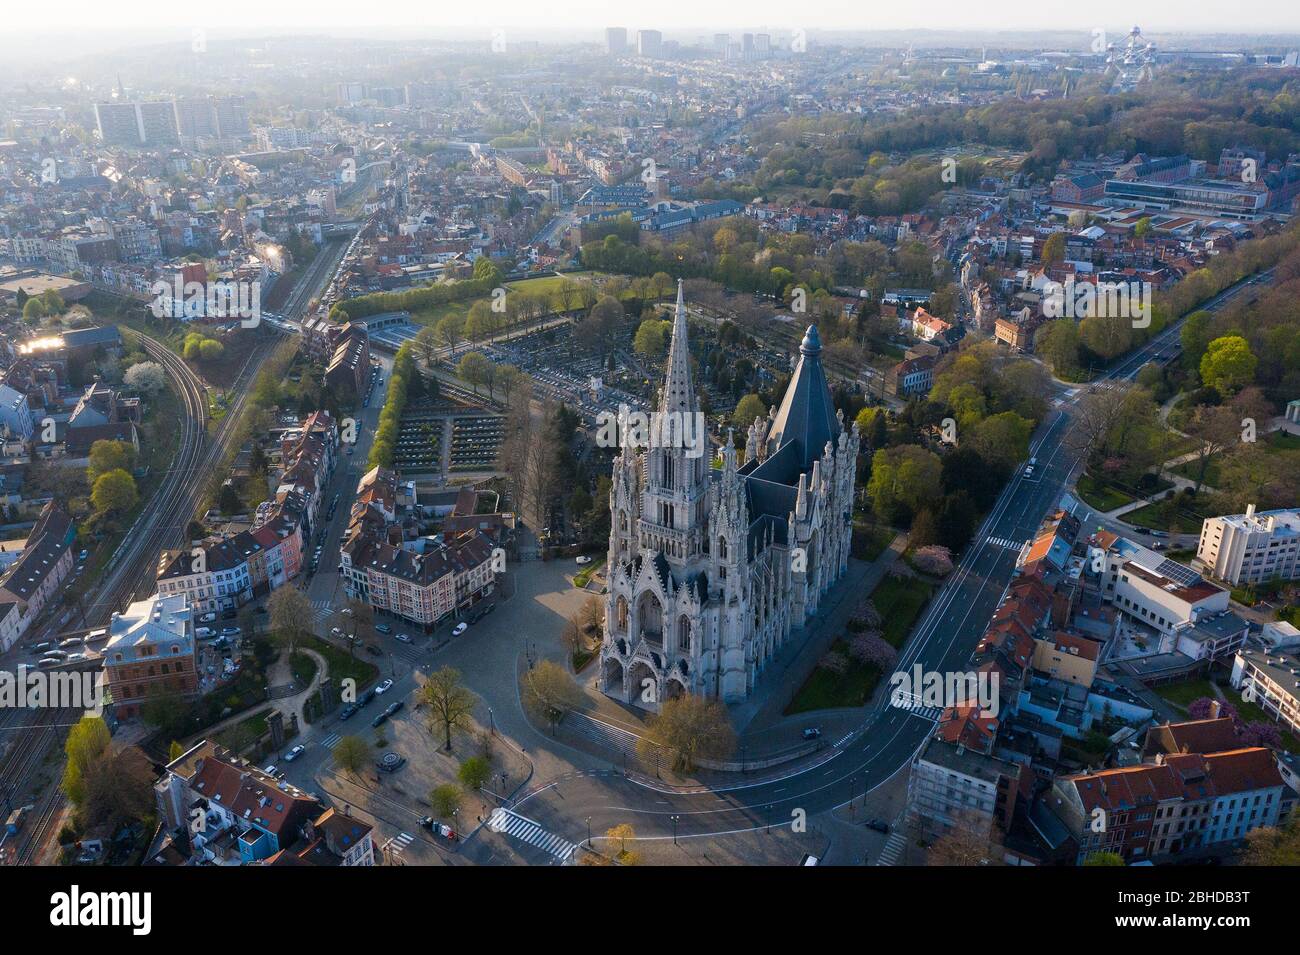 Brussels, Laeken, Belgium, April 8, 2020: aerial view of the Church of Our Lady of Laeken - Église Notre-Dame de Laeken Stock Photo